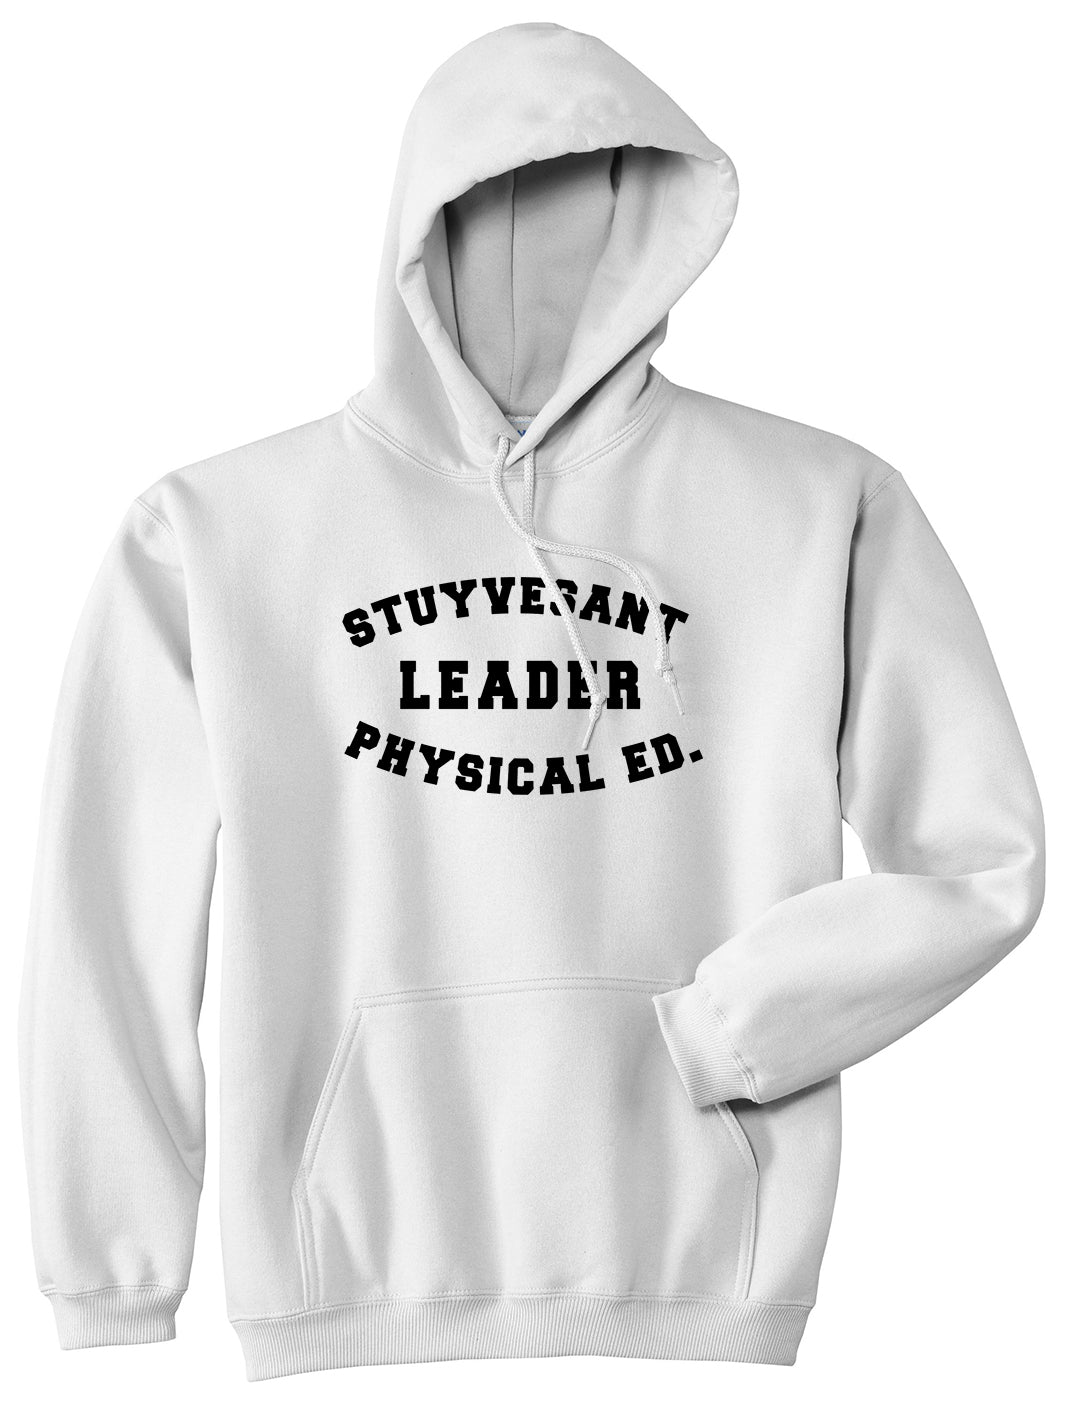 Stuyvesant Leader Physical Ed Mens Pullover Hoodie White